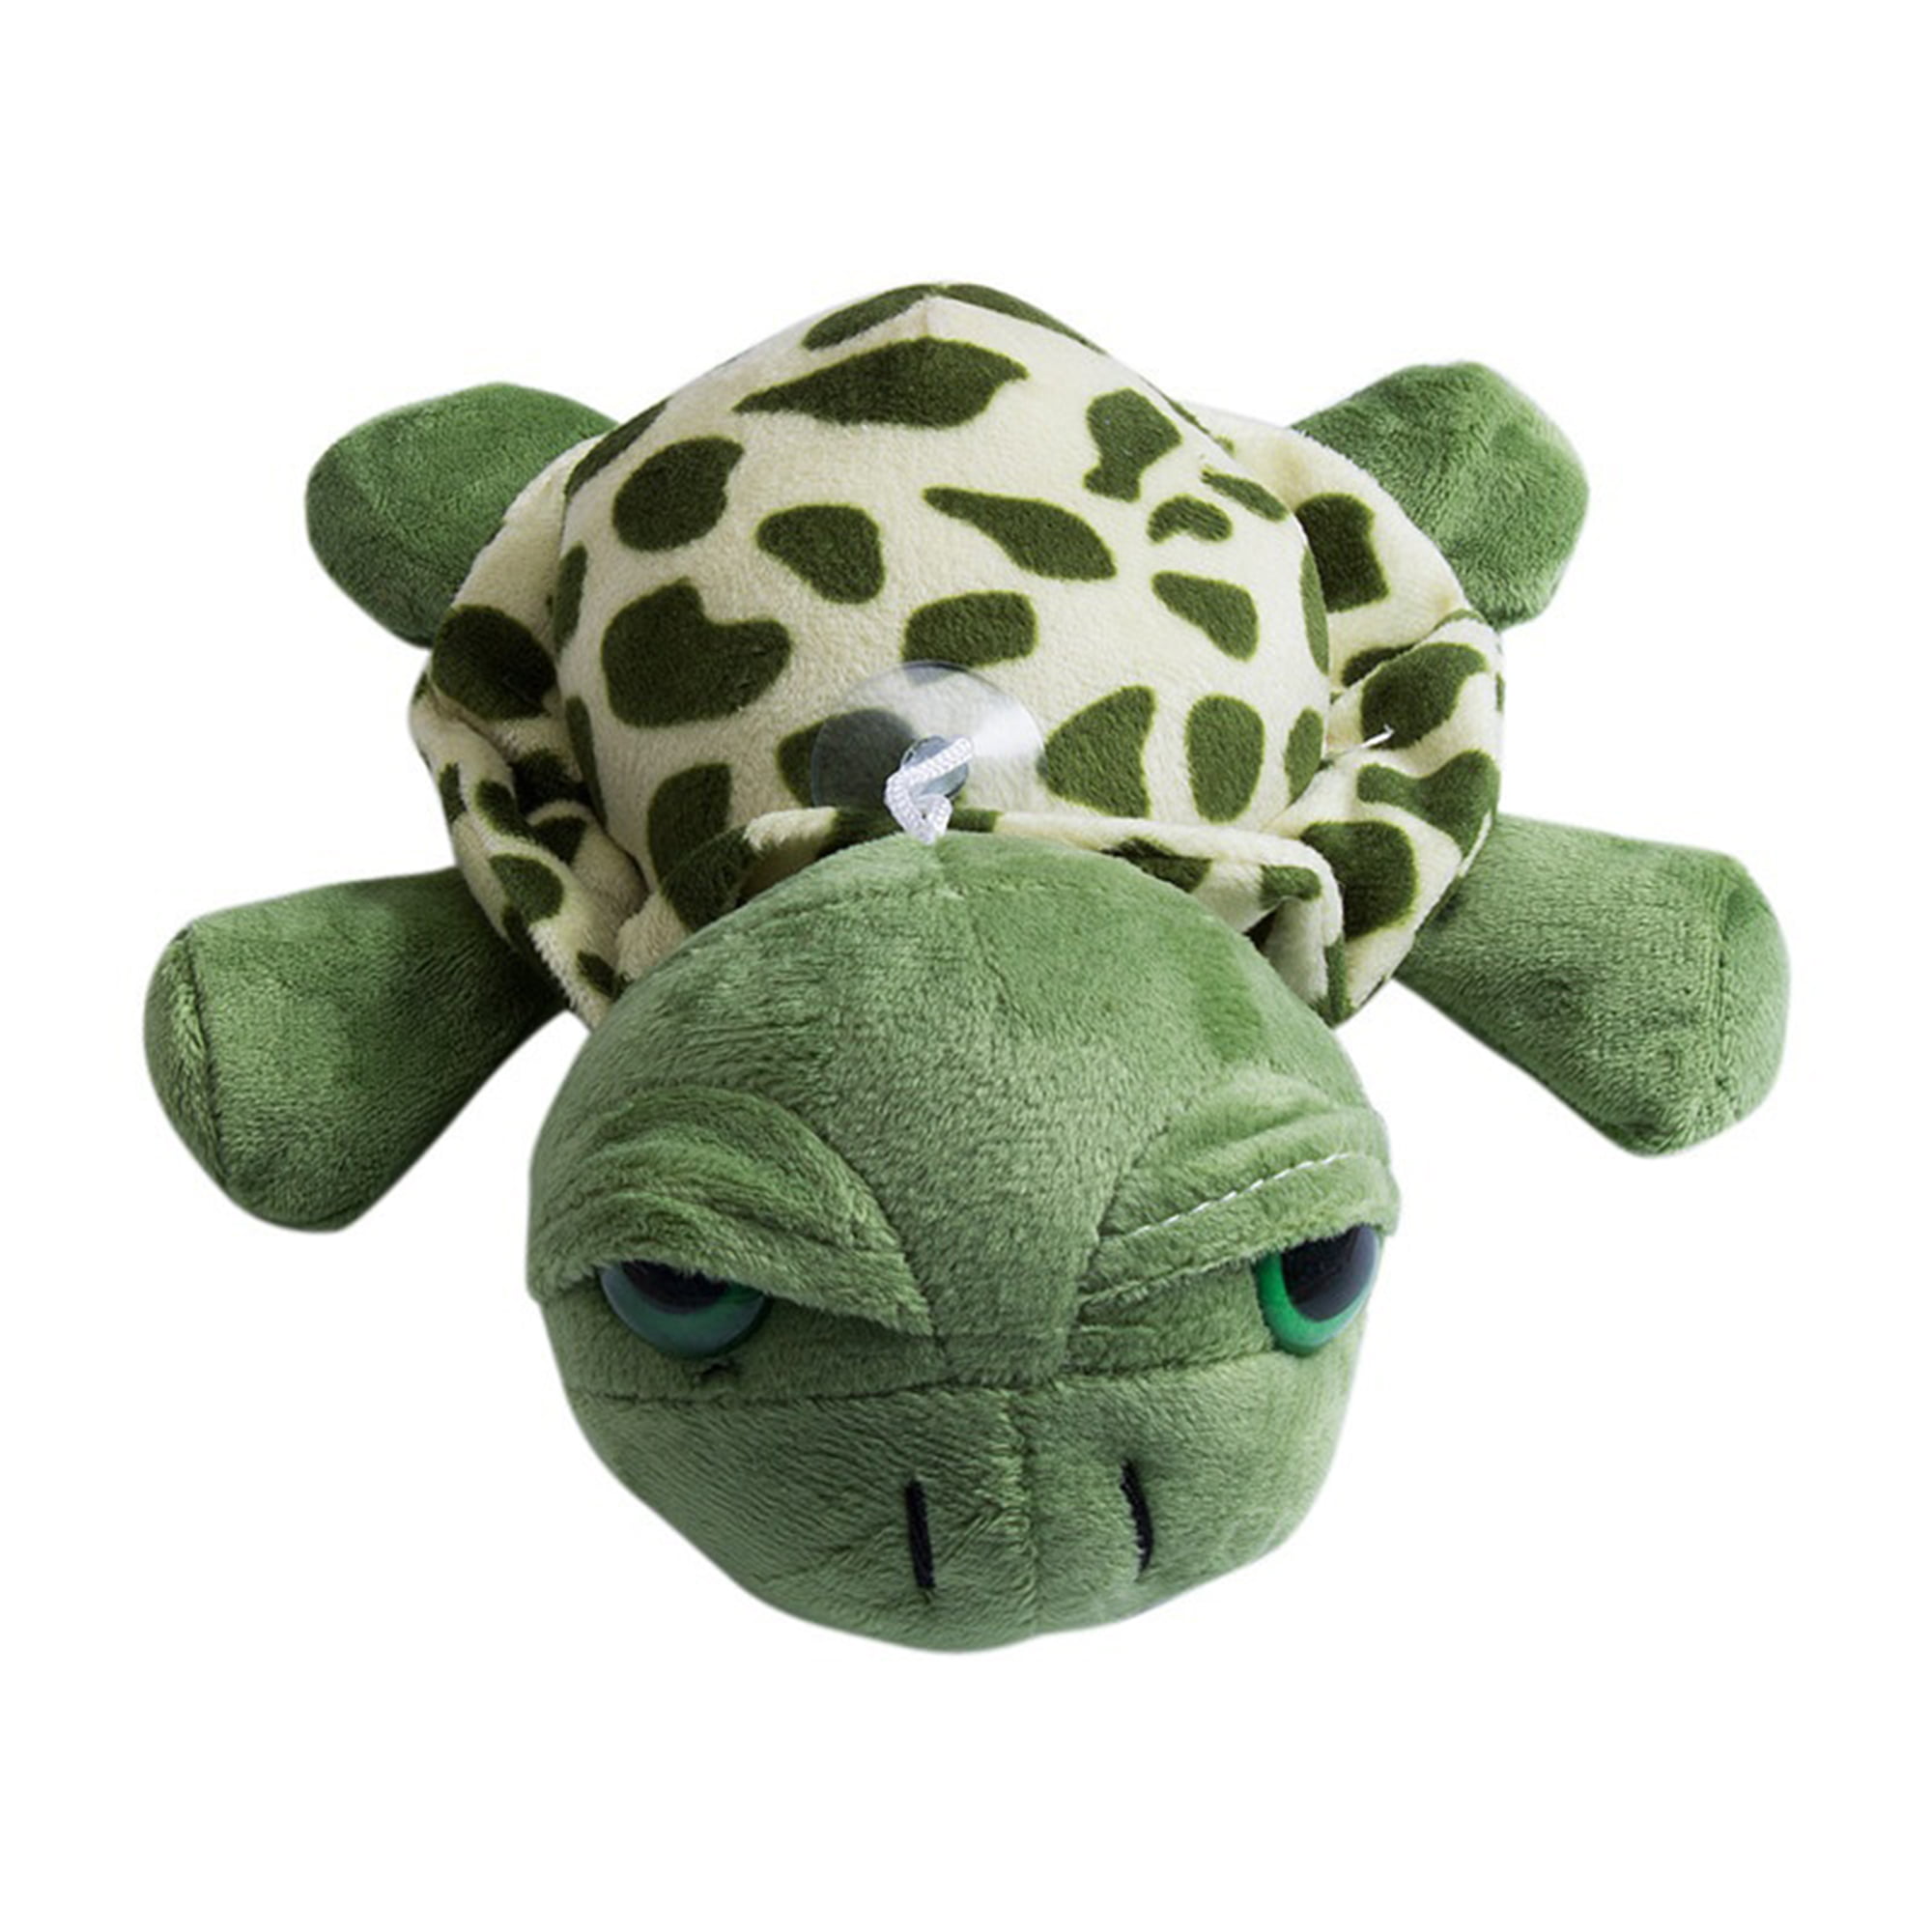 Giant Huge Tortoise Turtle Stuffed Cartoon Animals Soft Plush Big Toy Doll Gifts 